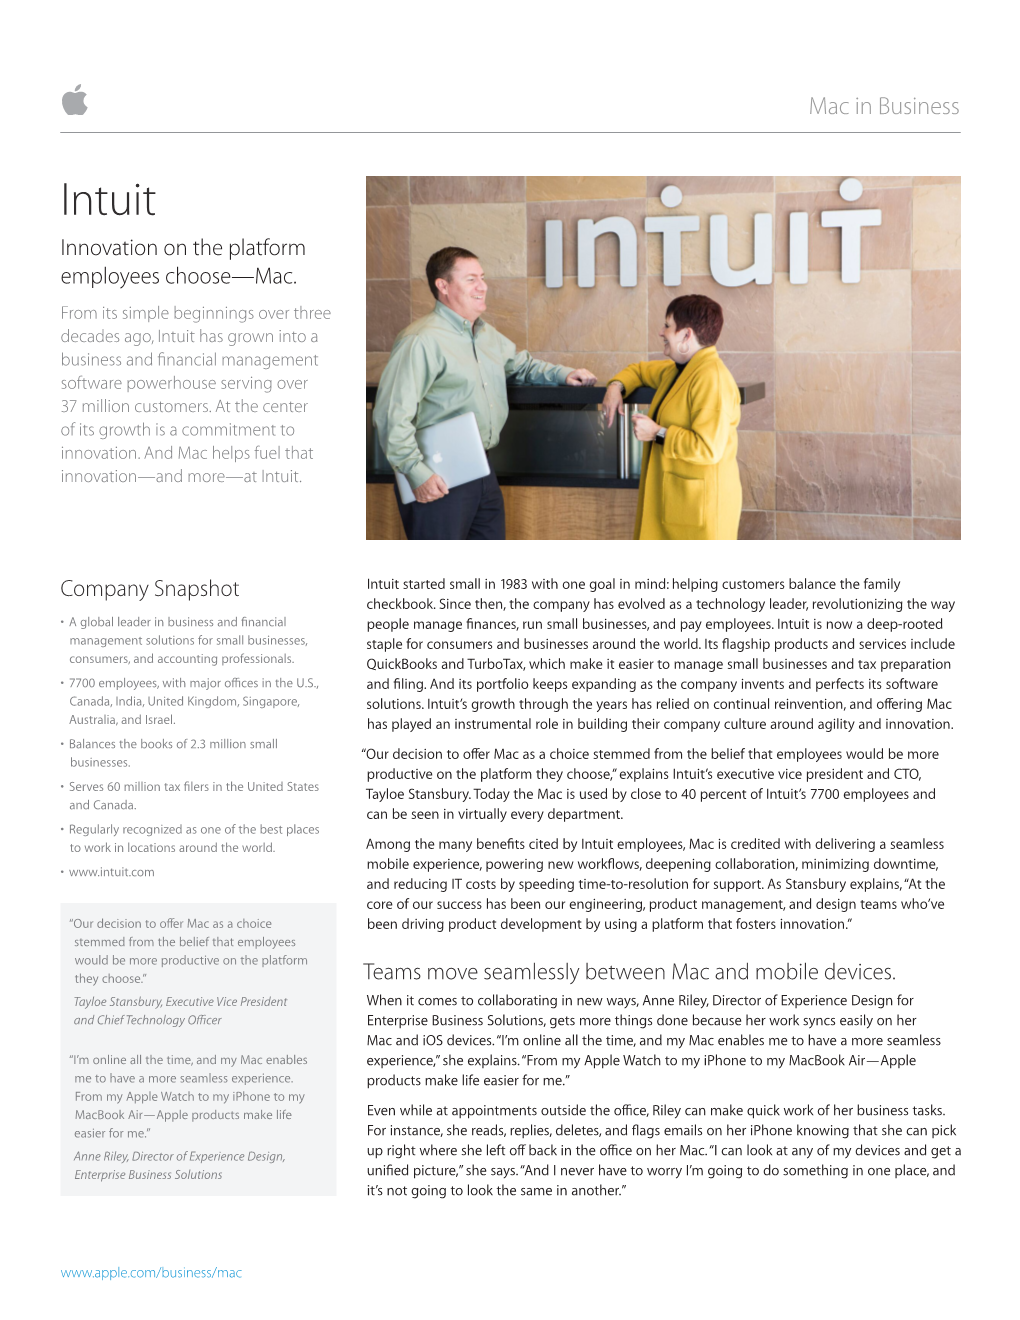 Intuit Innovation on the Platform Employees Choose—Mac